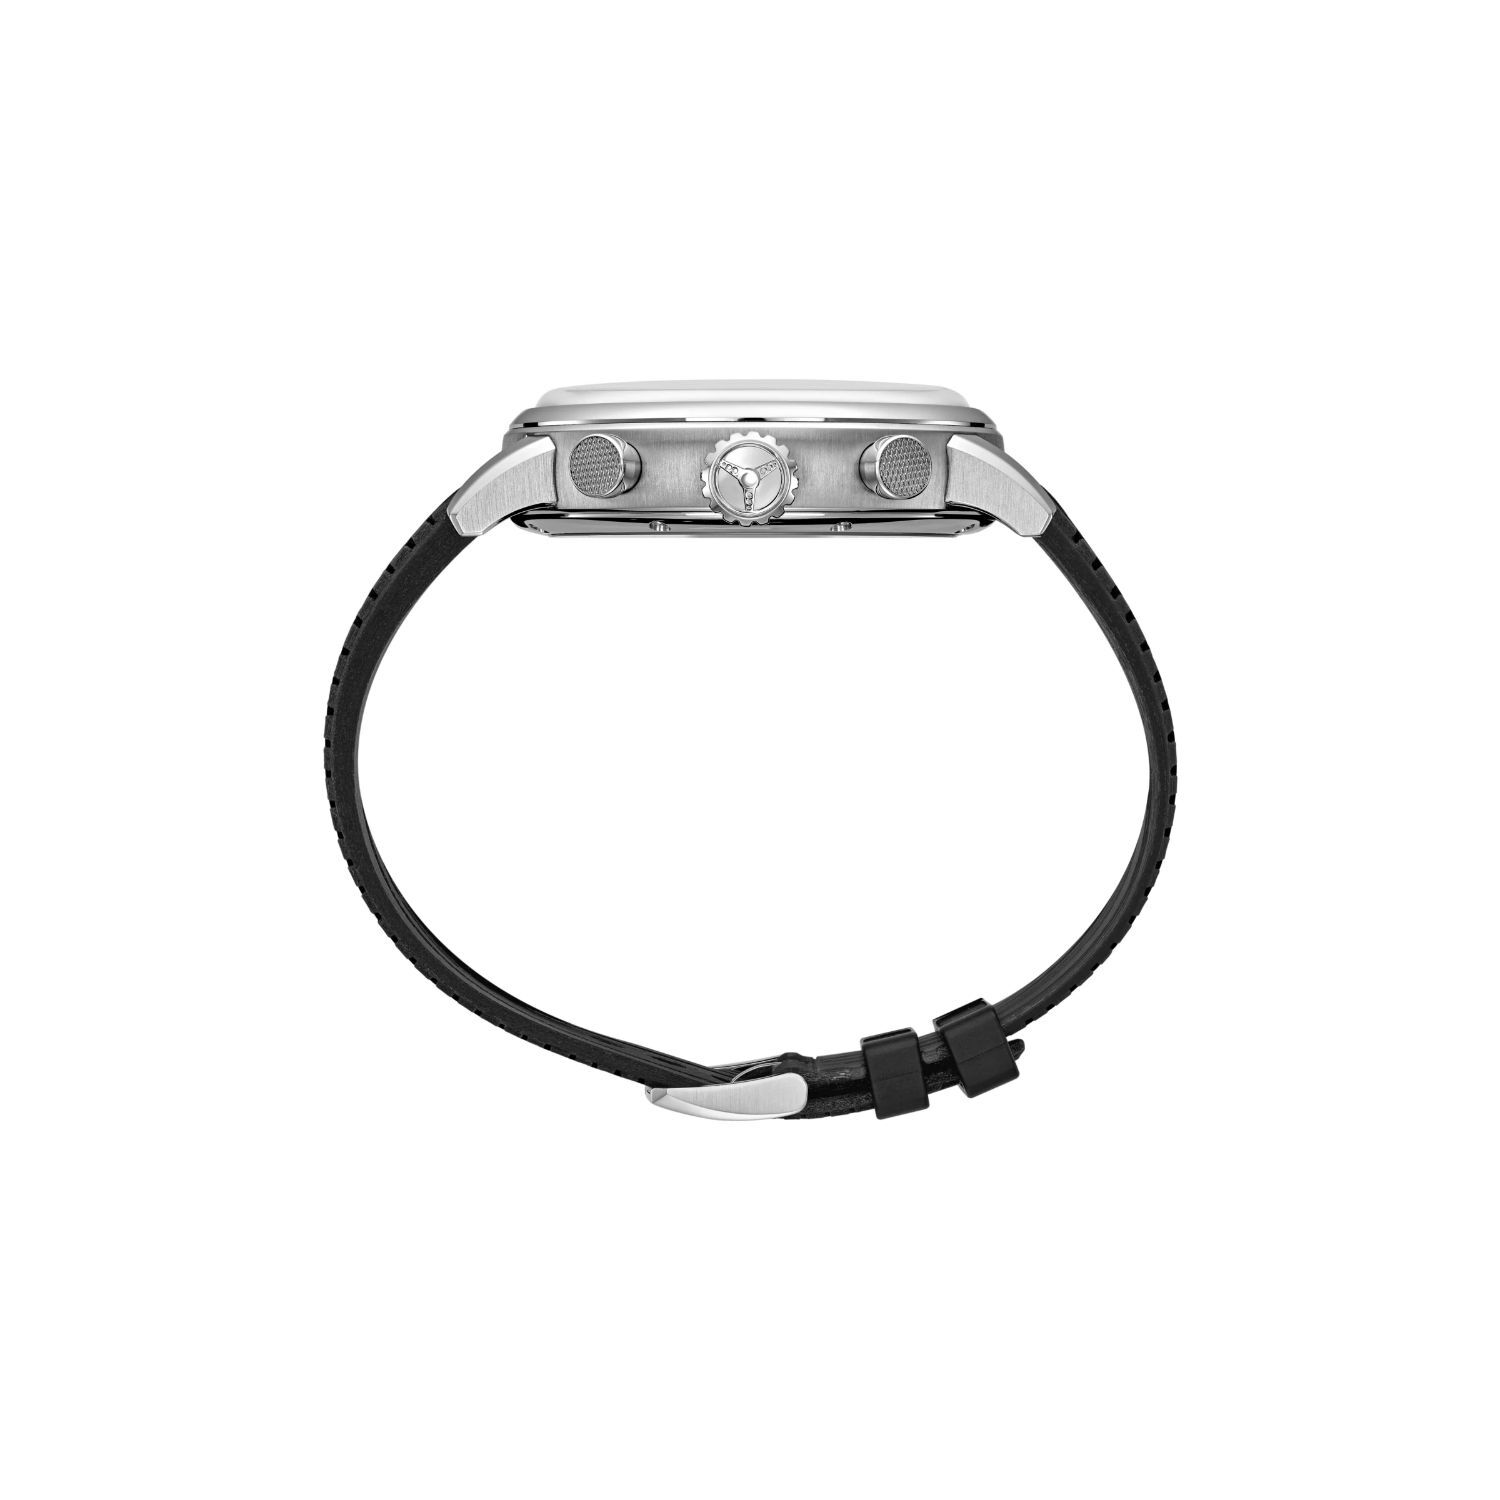 Chopard Mille Miglia 40.5mm Black Chronograph Dial Black Rubber Strap Watch